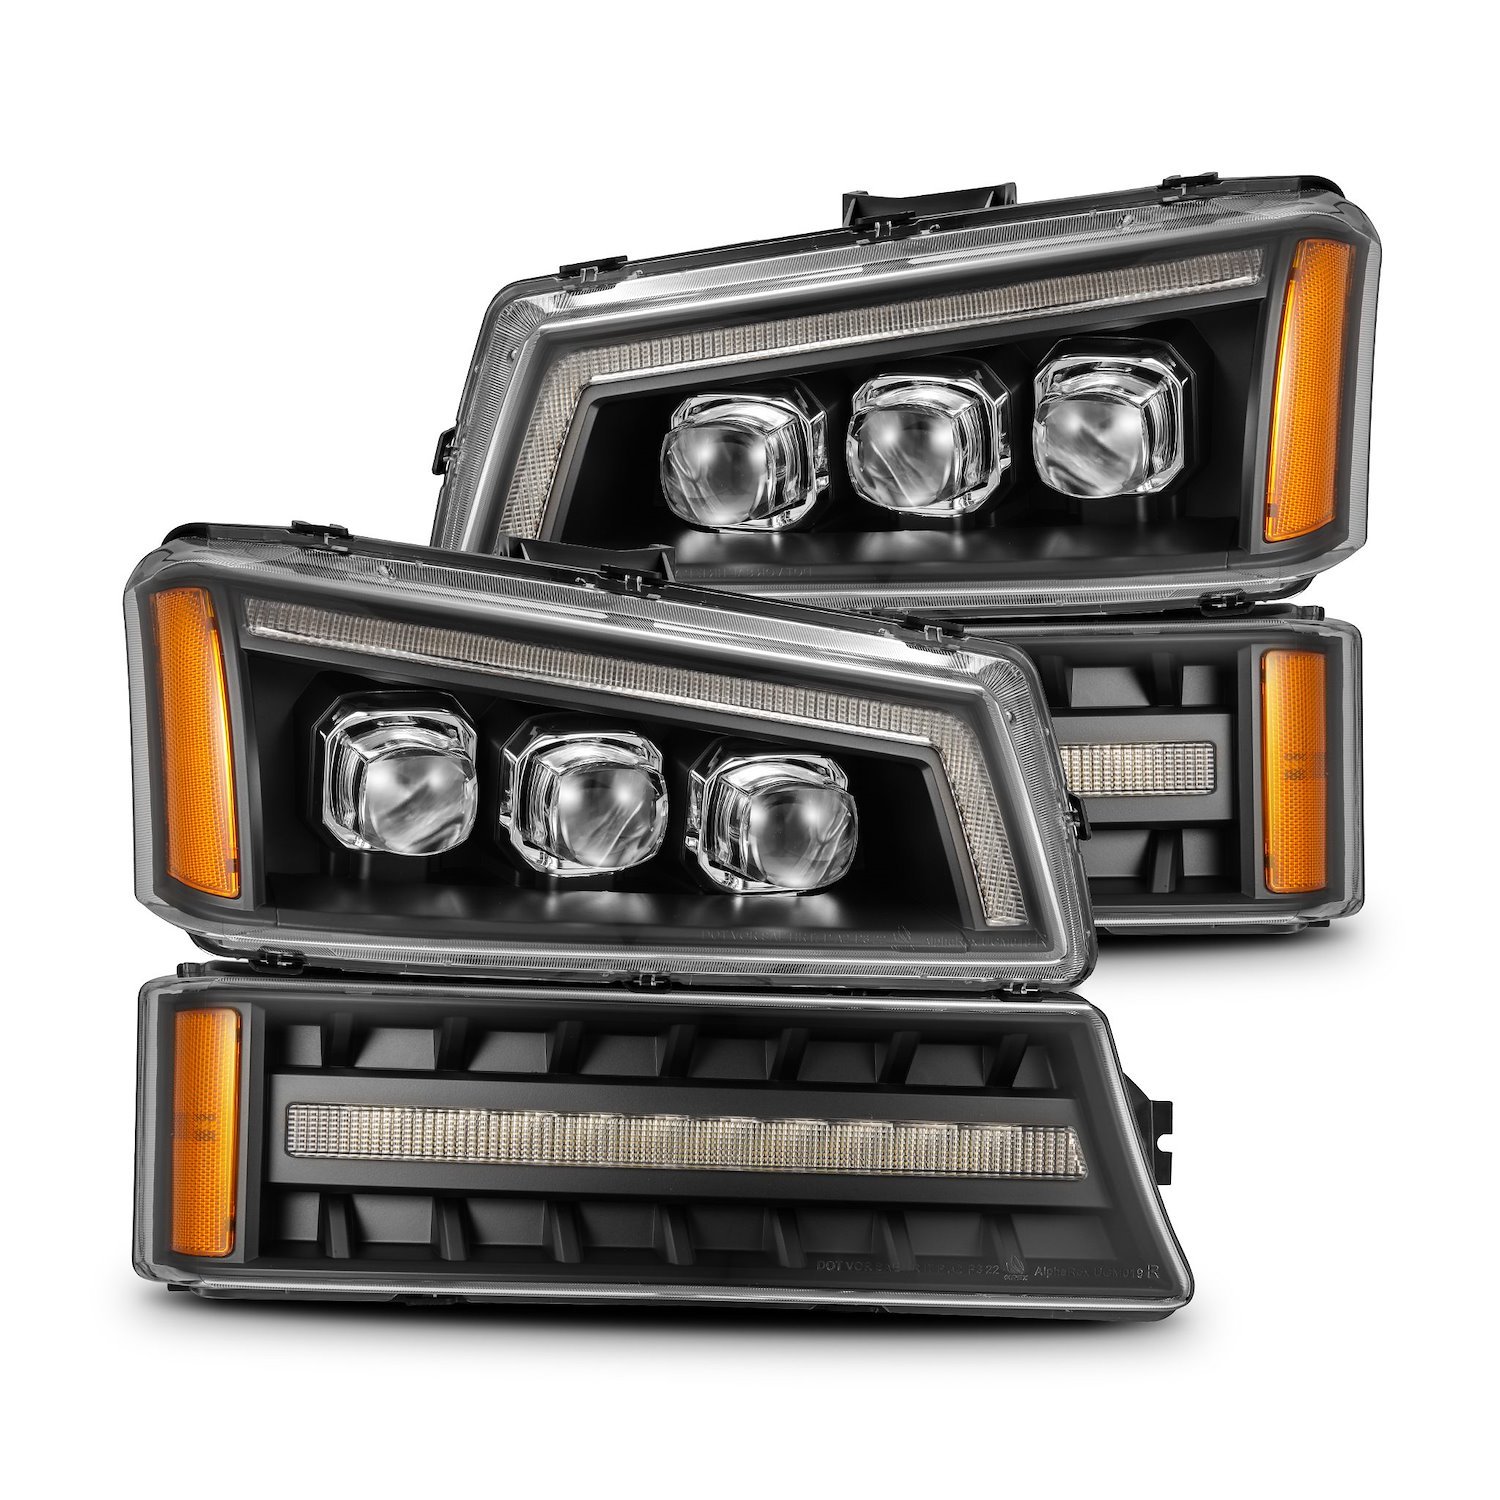 880256 NOVA-Series LED Projector Headlights for 2003-2006 Chevy Silverado 1500/2500/3500 - Black